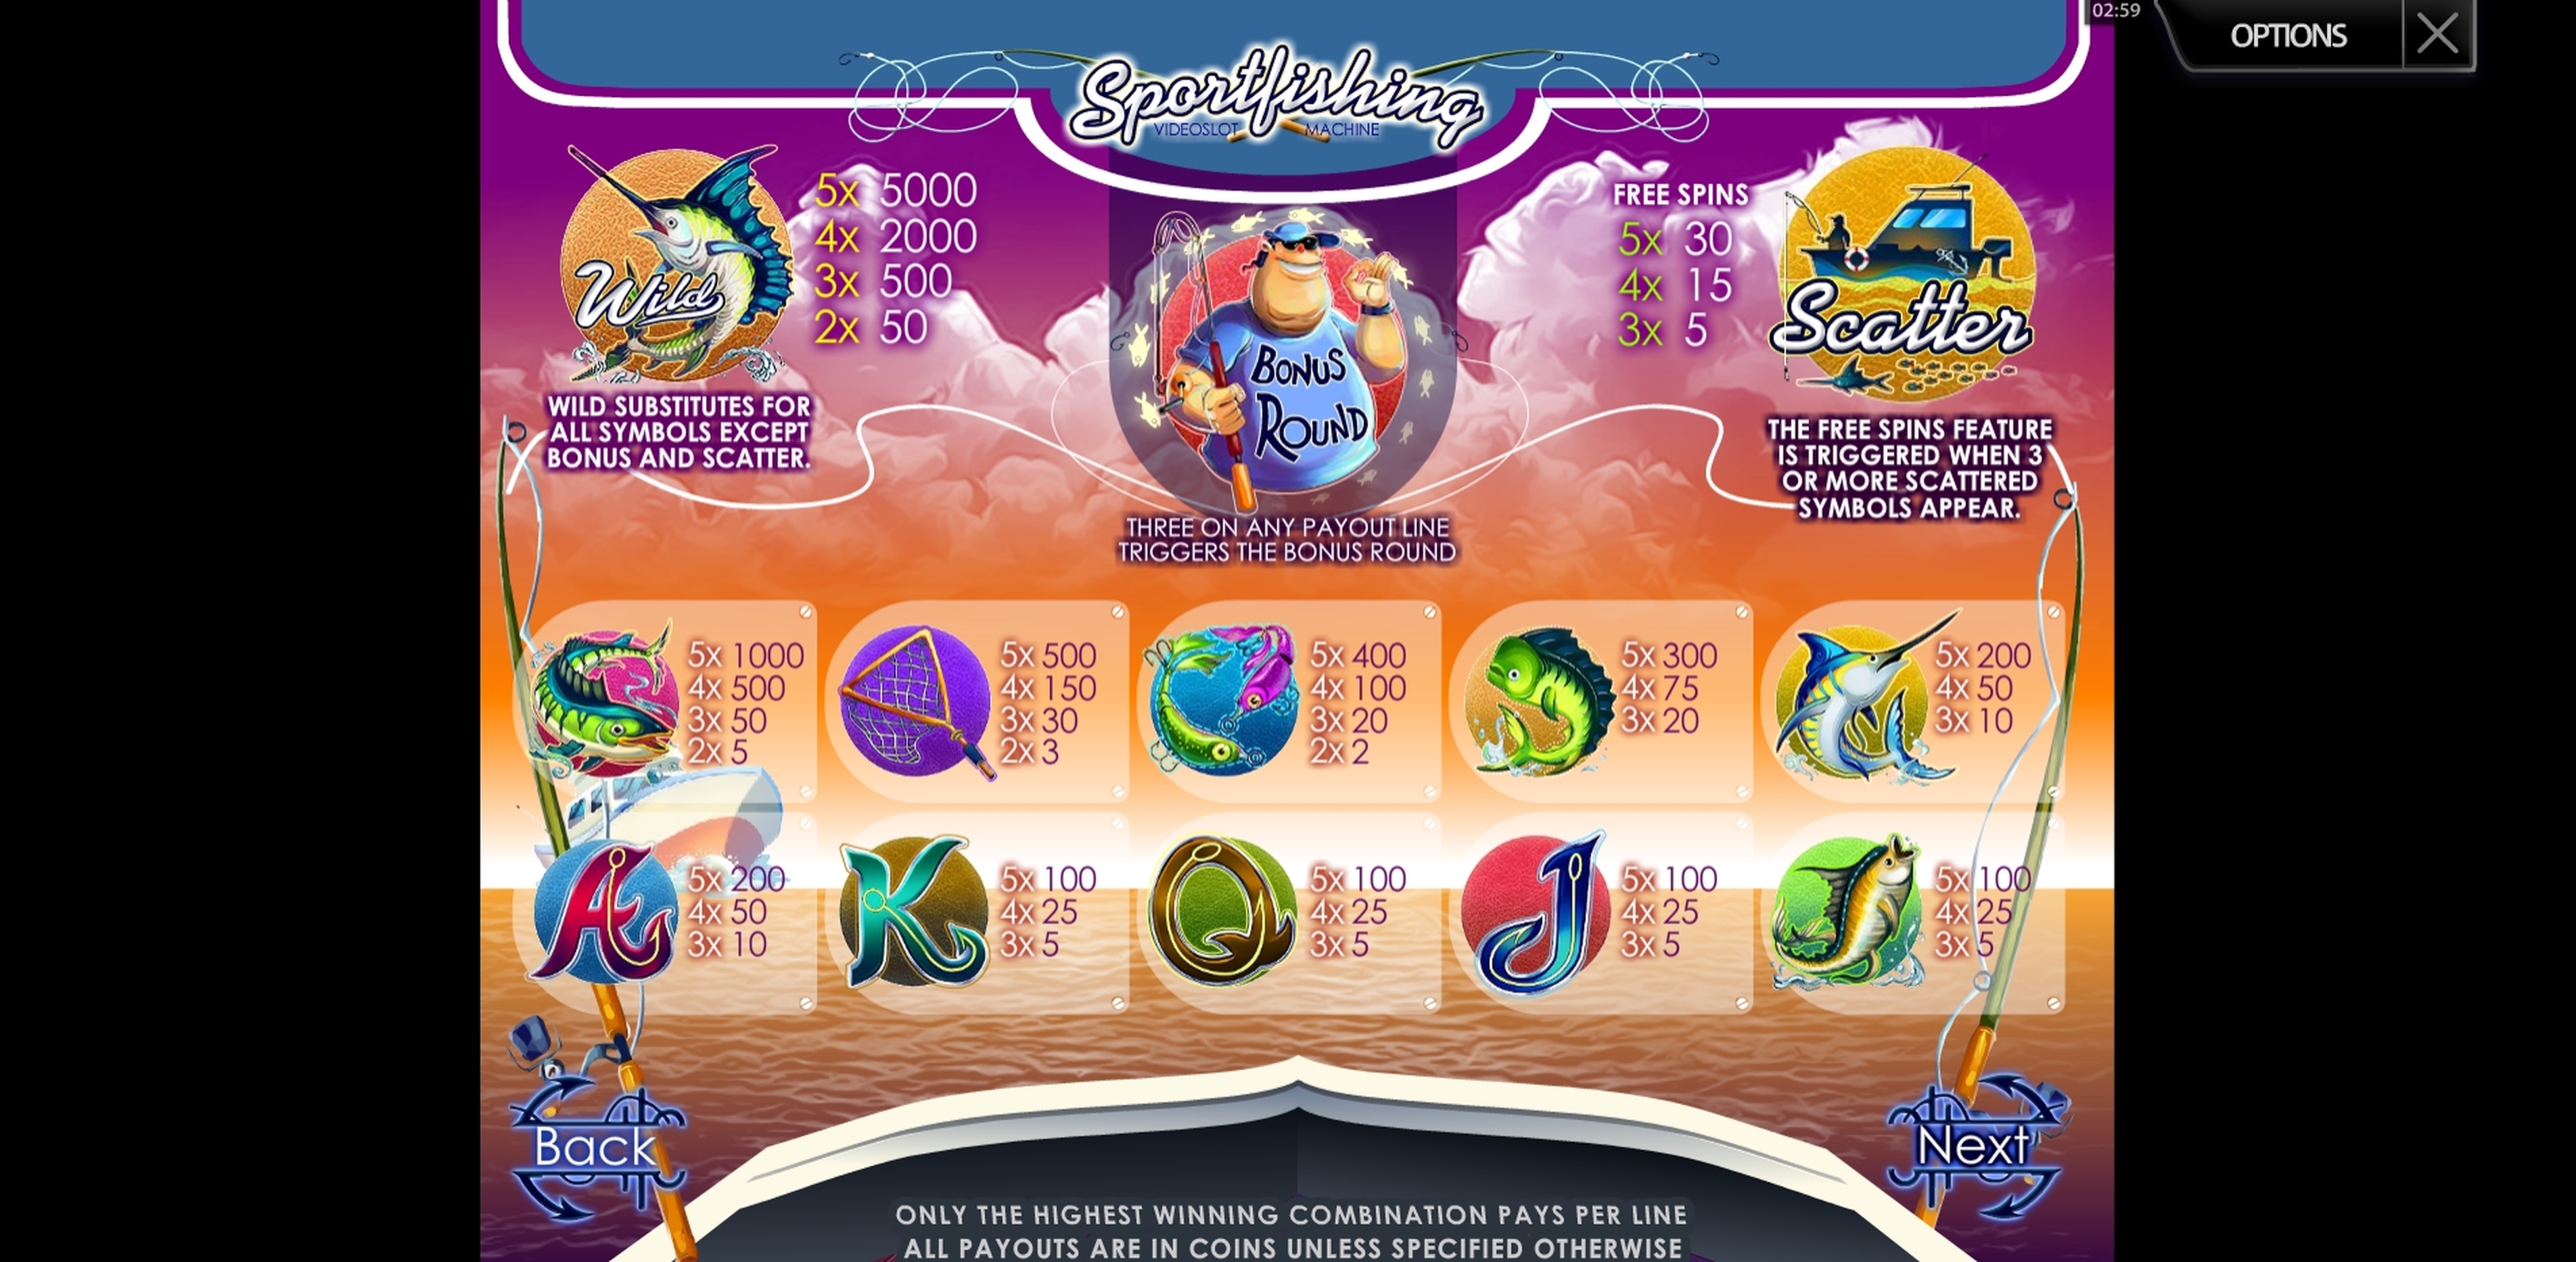 Info of Sportsfishing Slot Game by Multislot